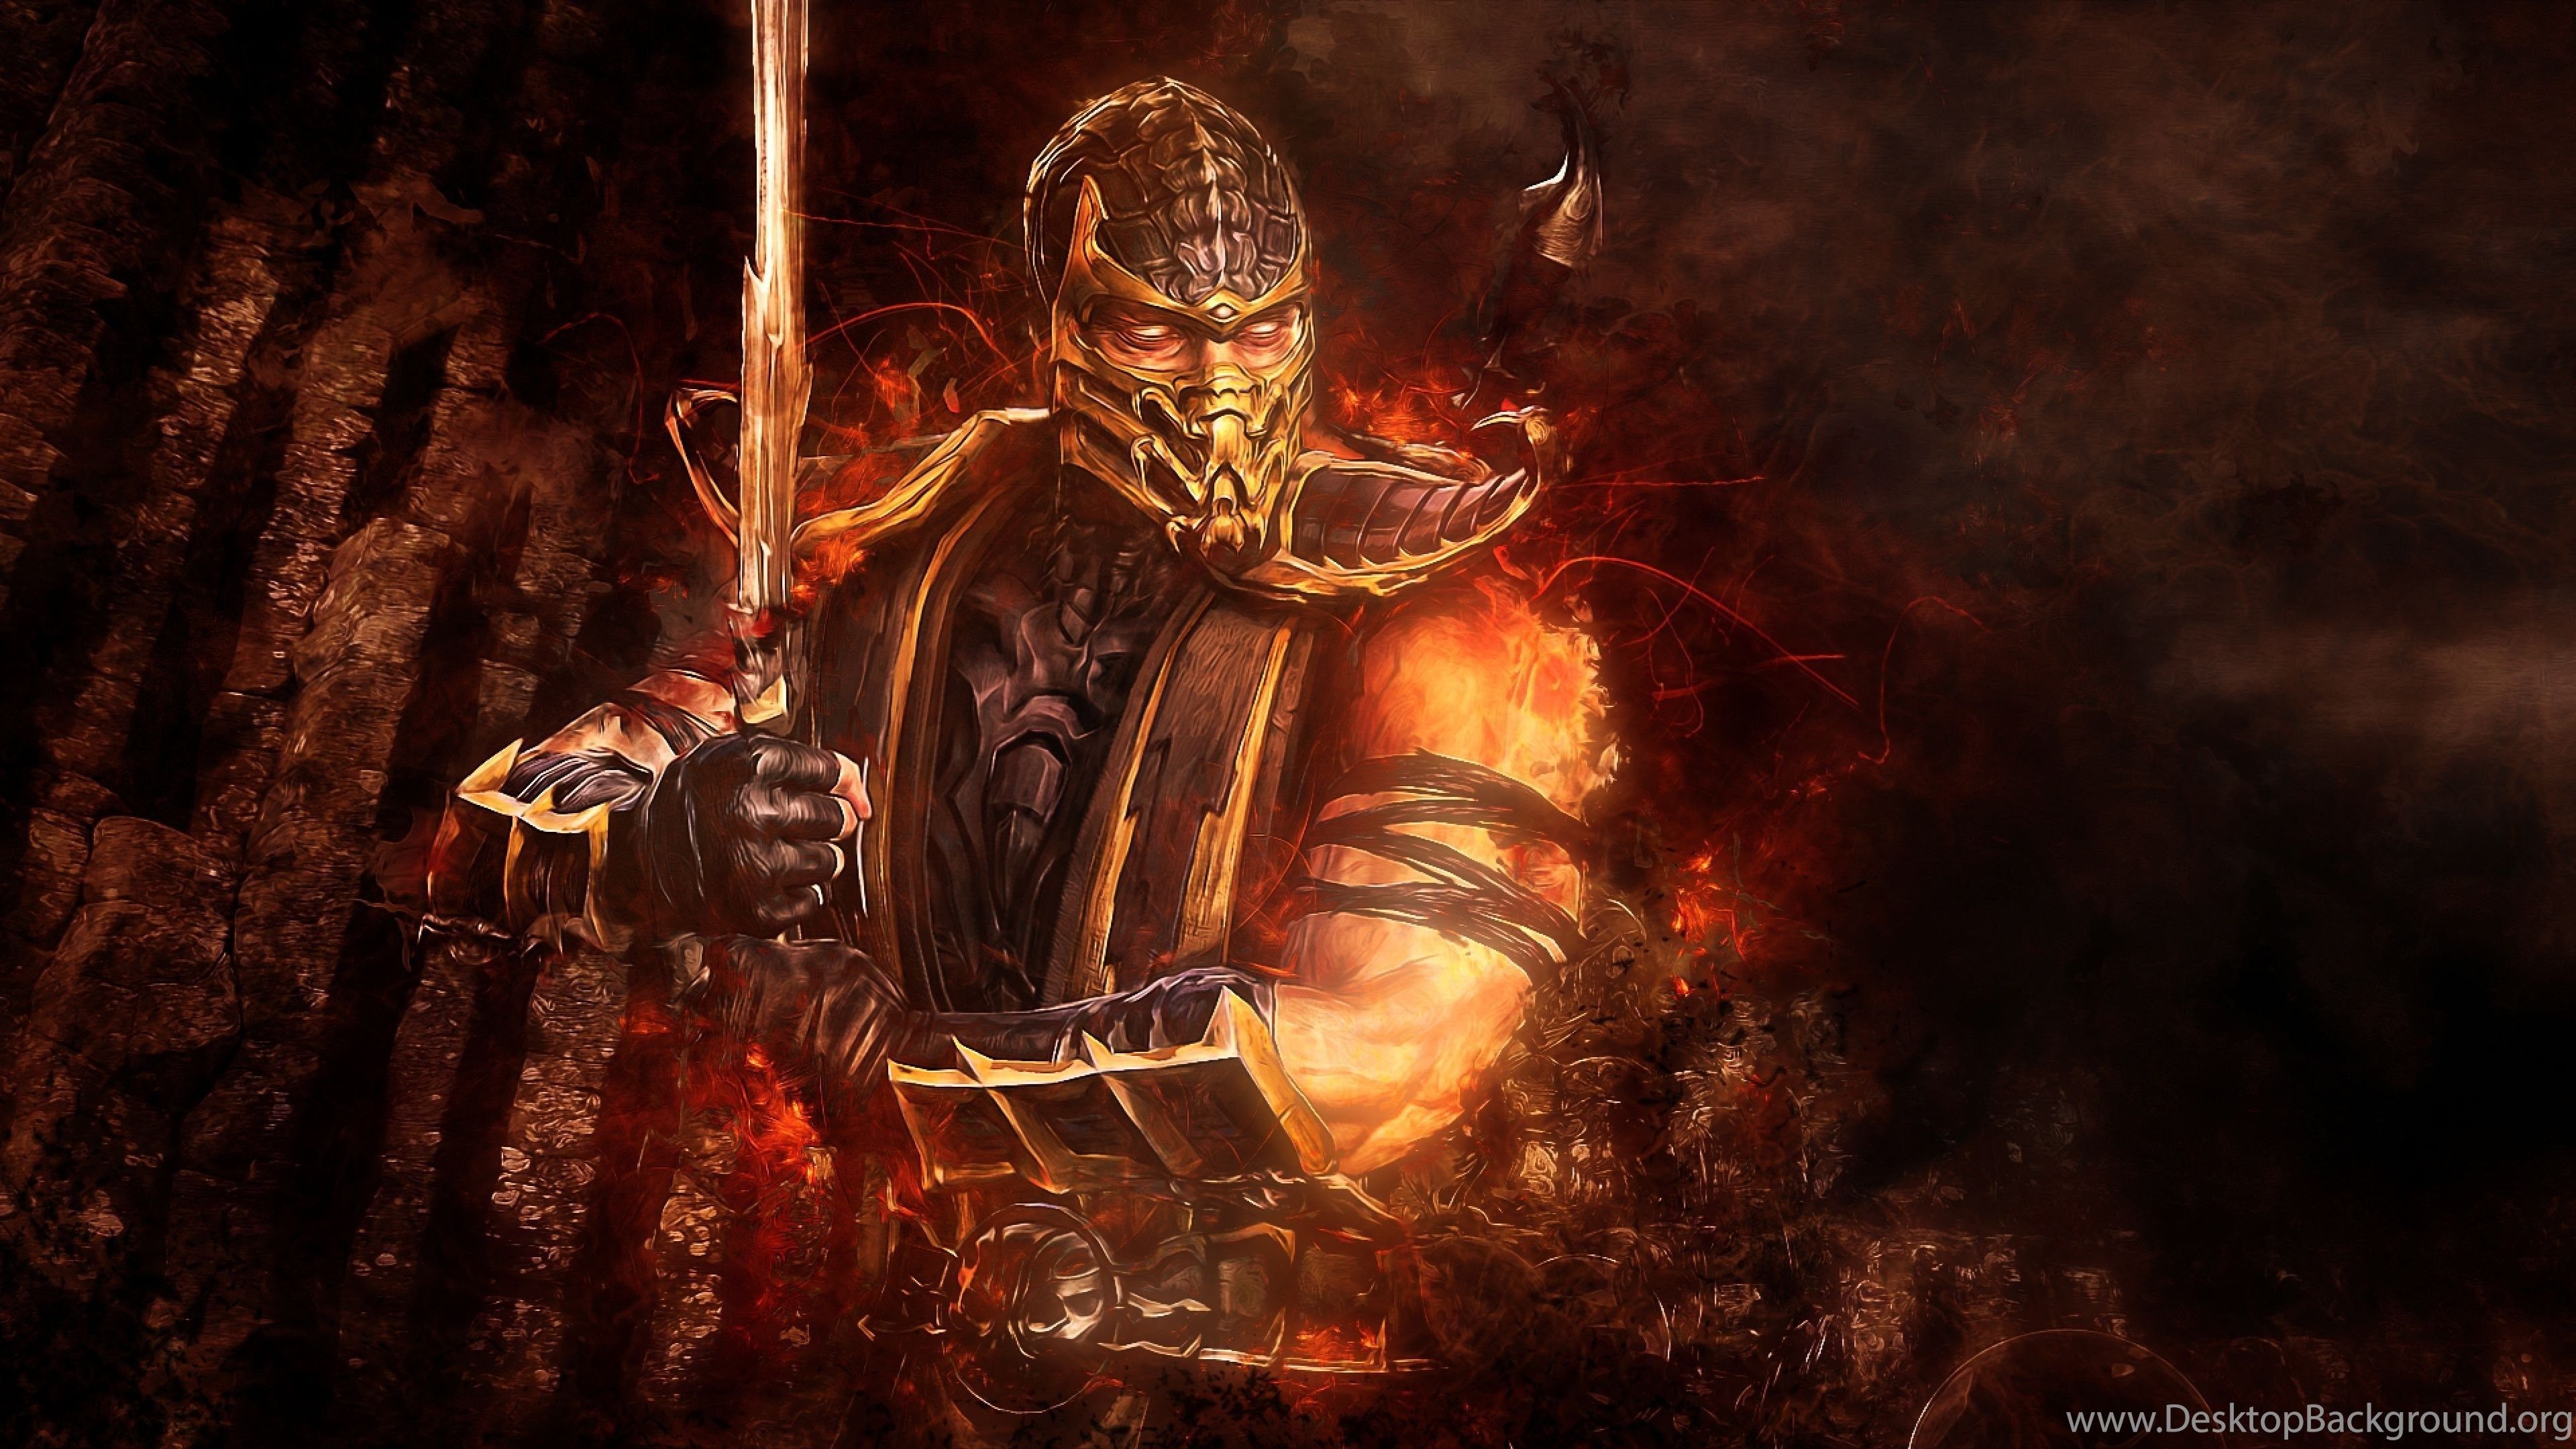 4K Ultra HD Mortal Kombat Wallpaper HD, Desktop Background. Desktop Background